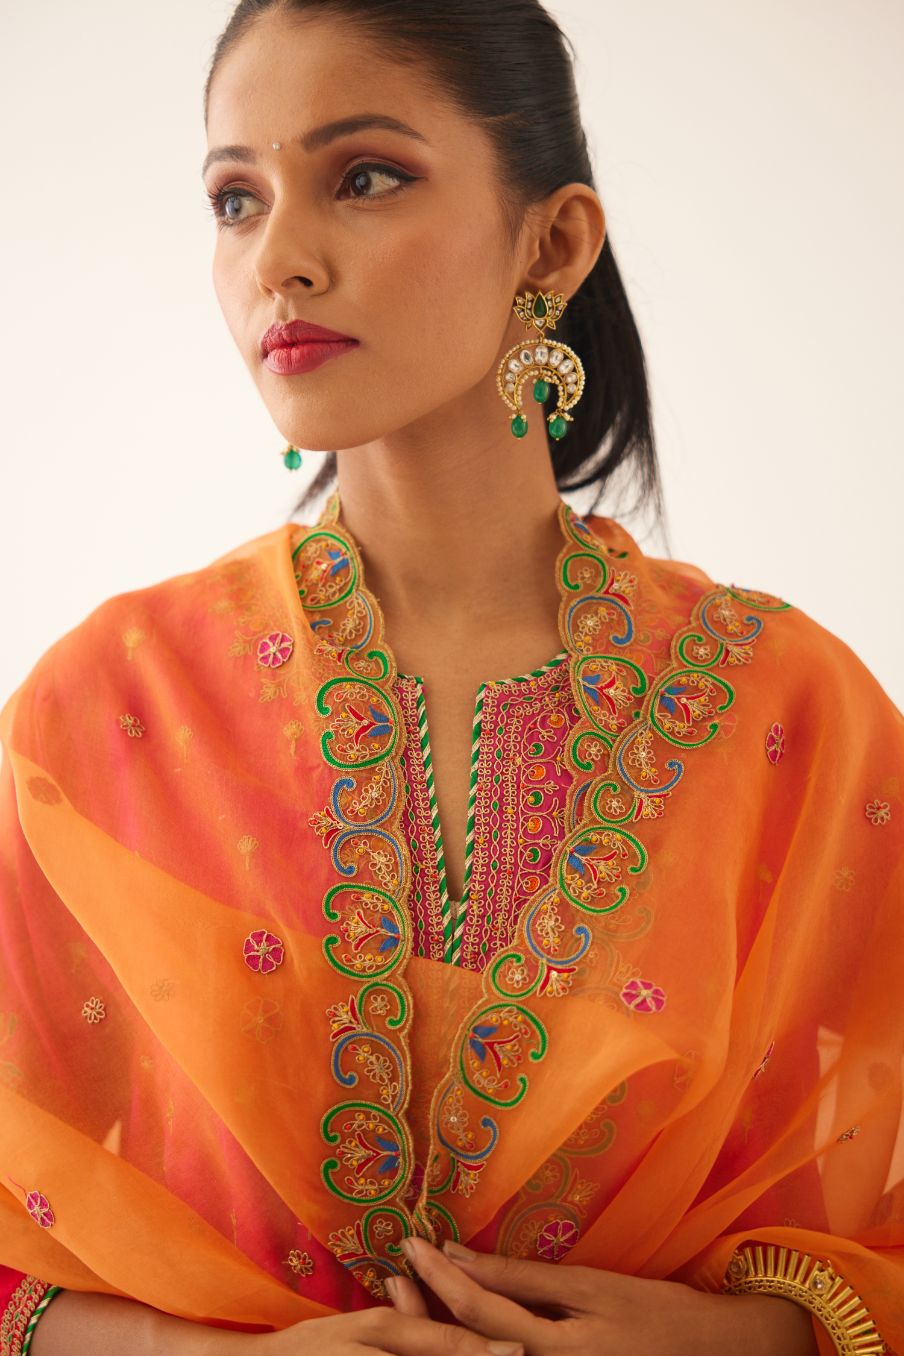 Red & fuchsia silk short kalidar kurta set with all over dori & silk thread embroidery, highlighted with contrast bead & sequins work.